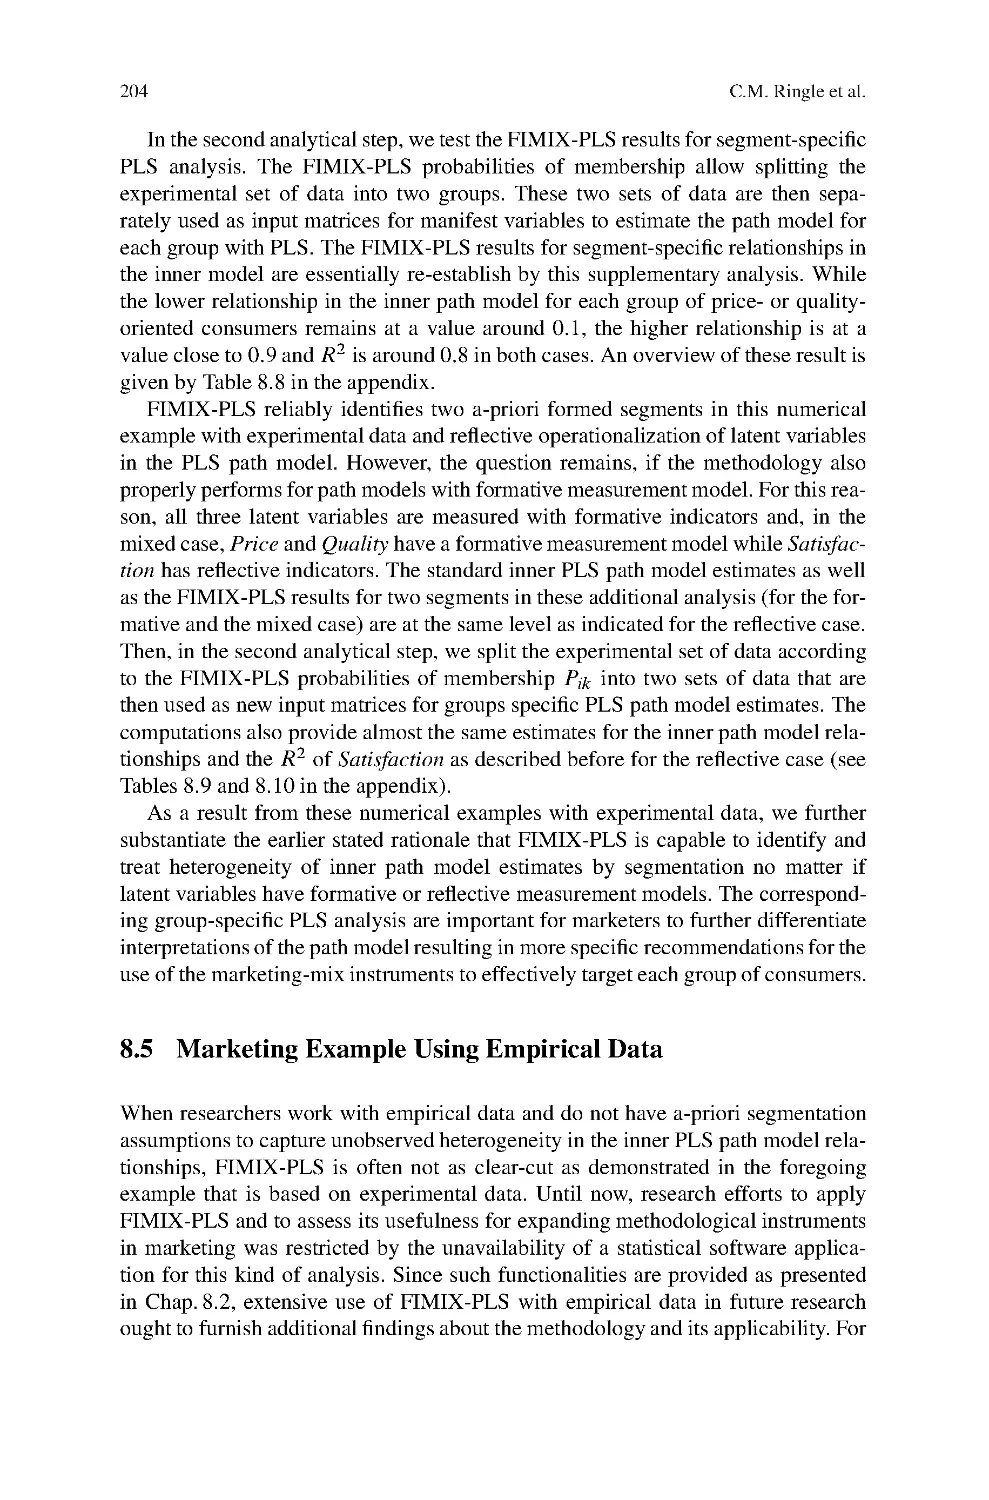 8.5 Marketing Example Using Empirical Data